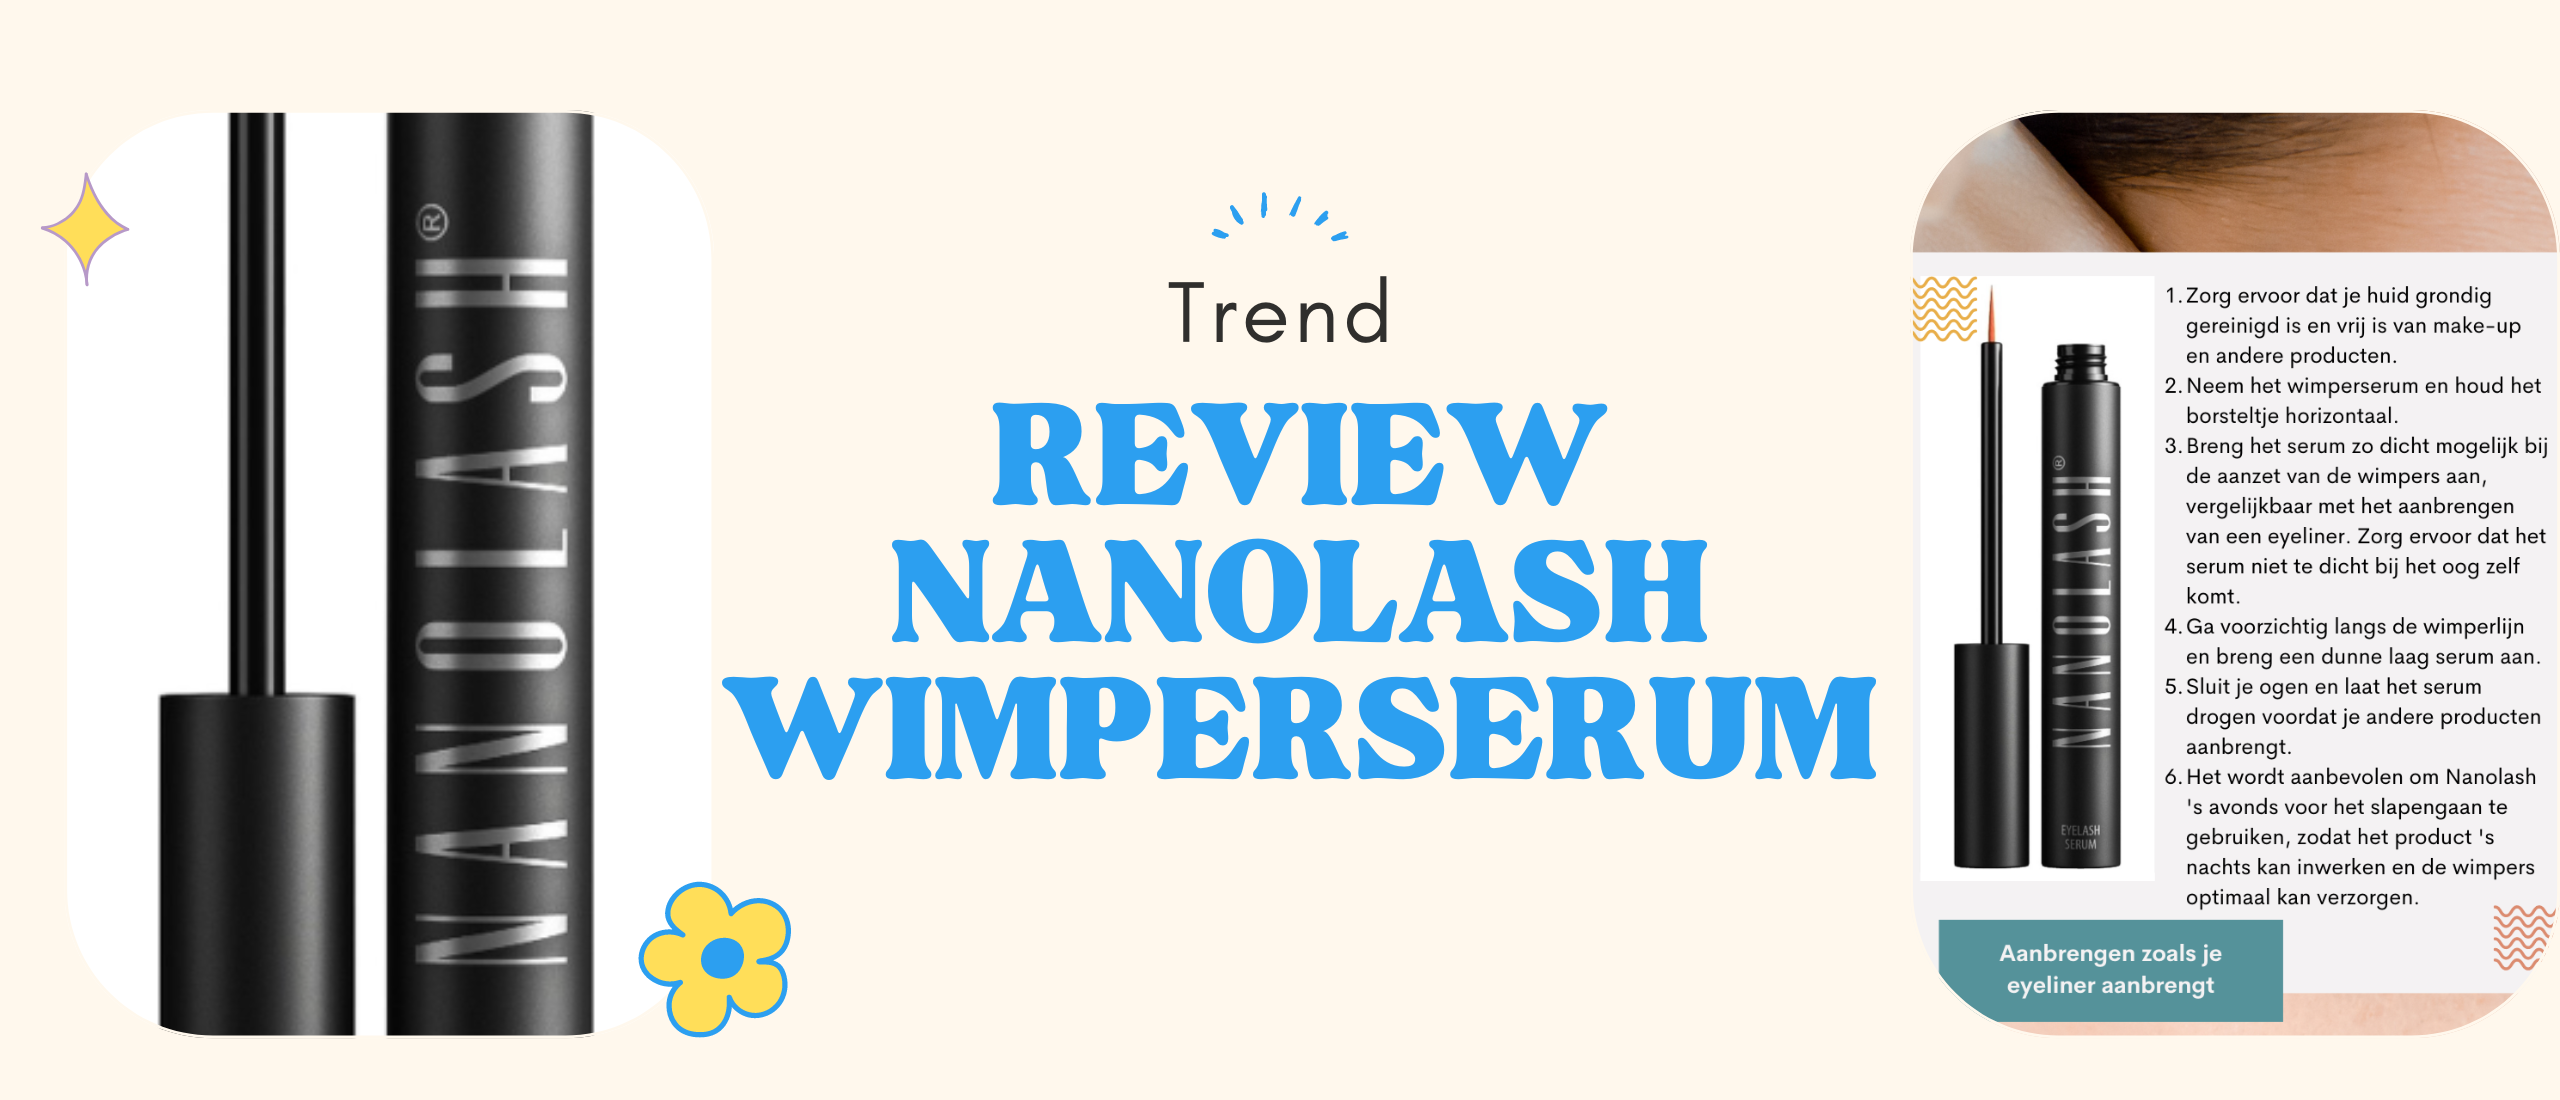 Review Nanolash Wimperserum